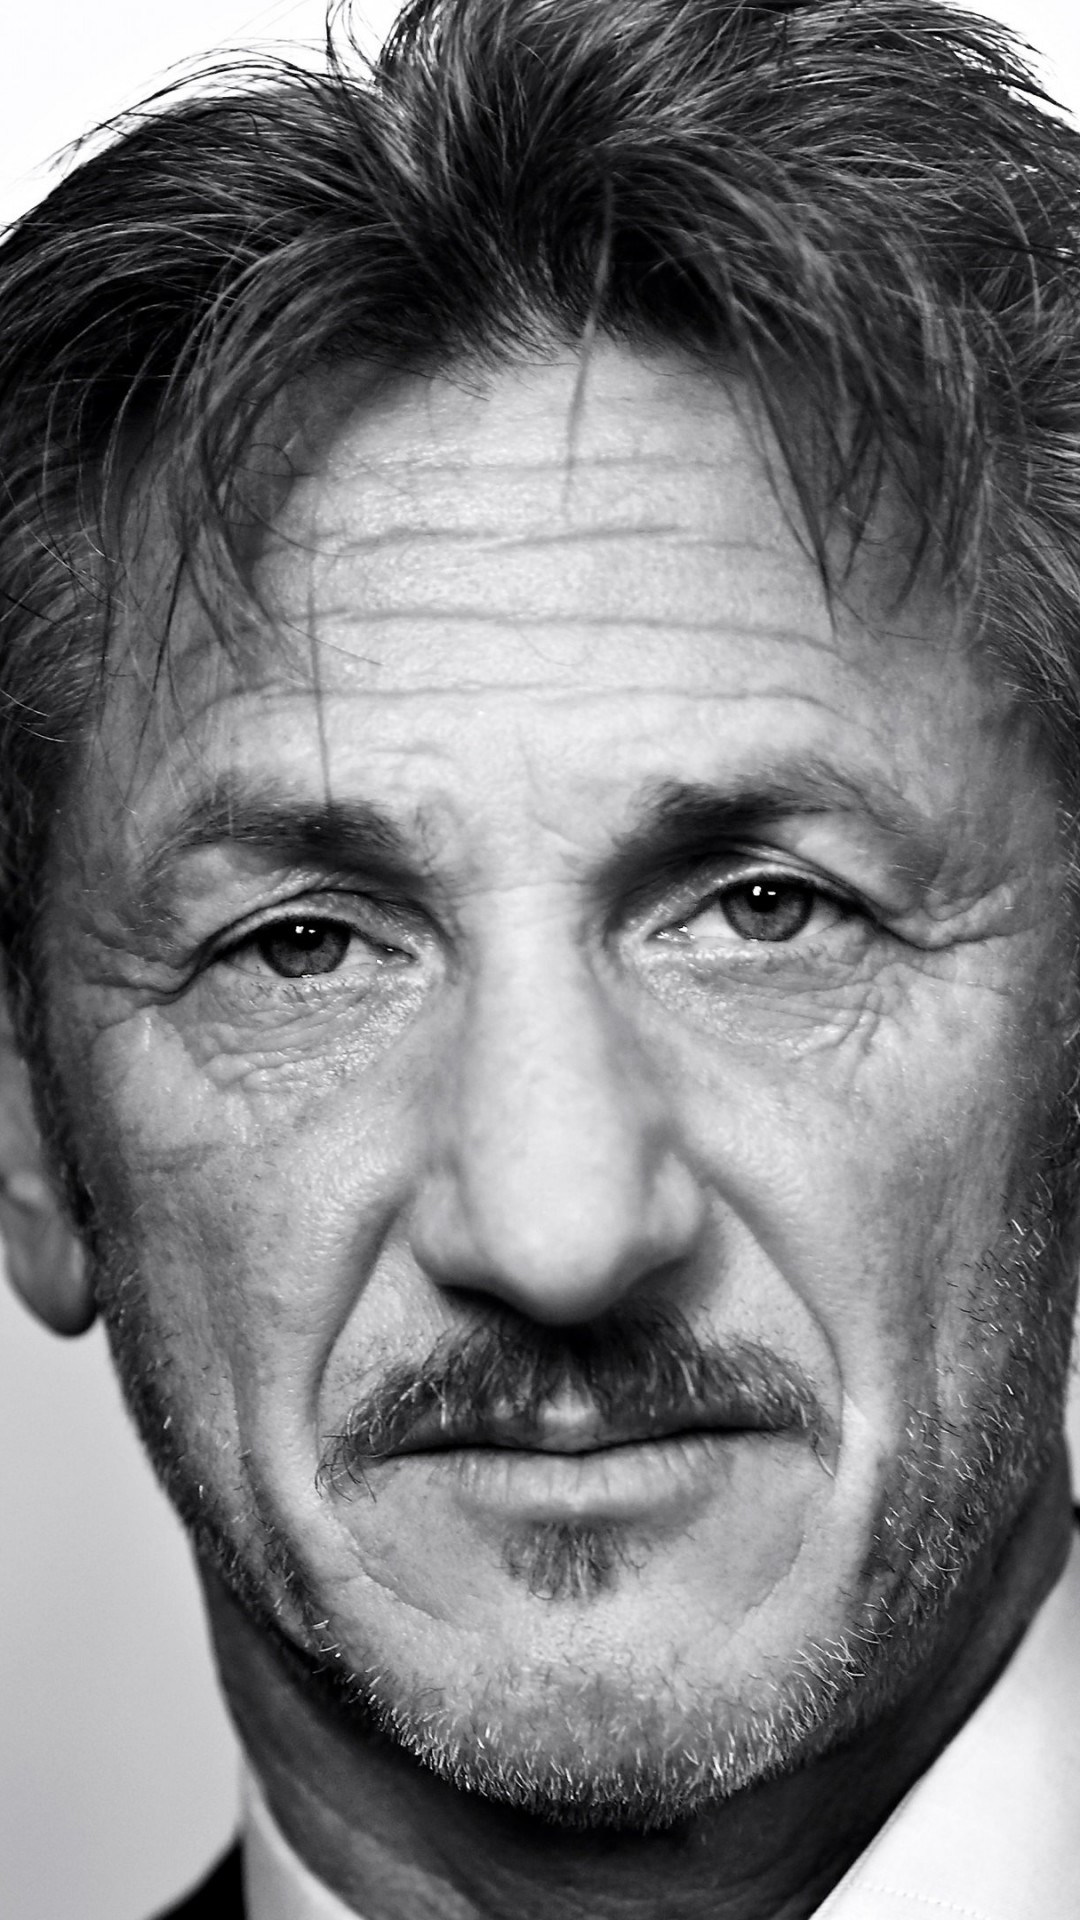 Sean Penn Portrait in Black & White Wallpaper for SONY Xperia Z1